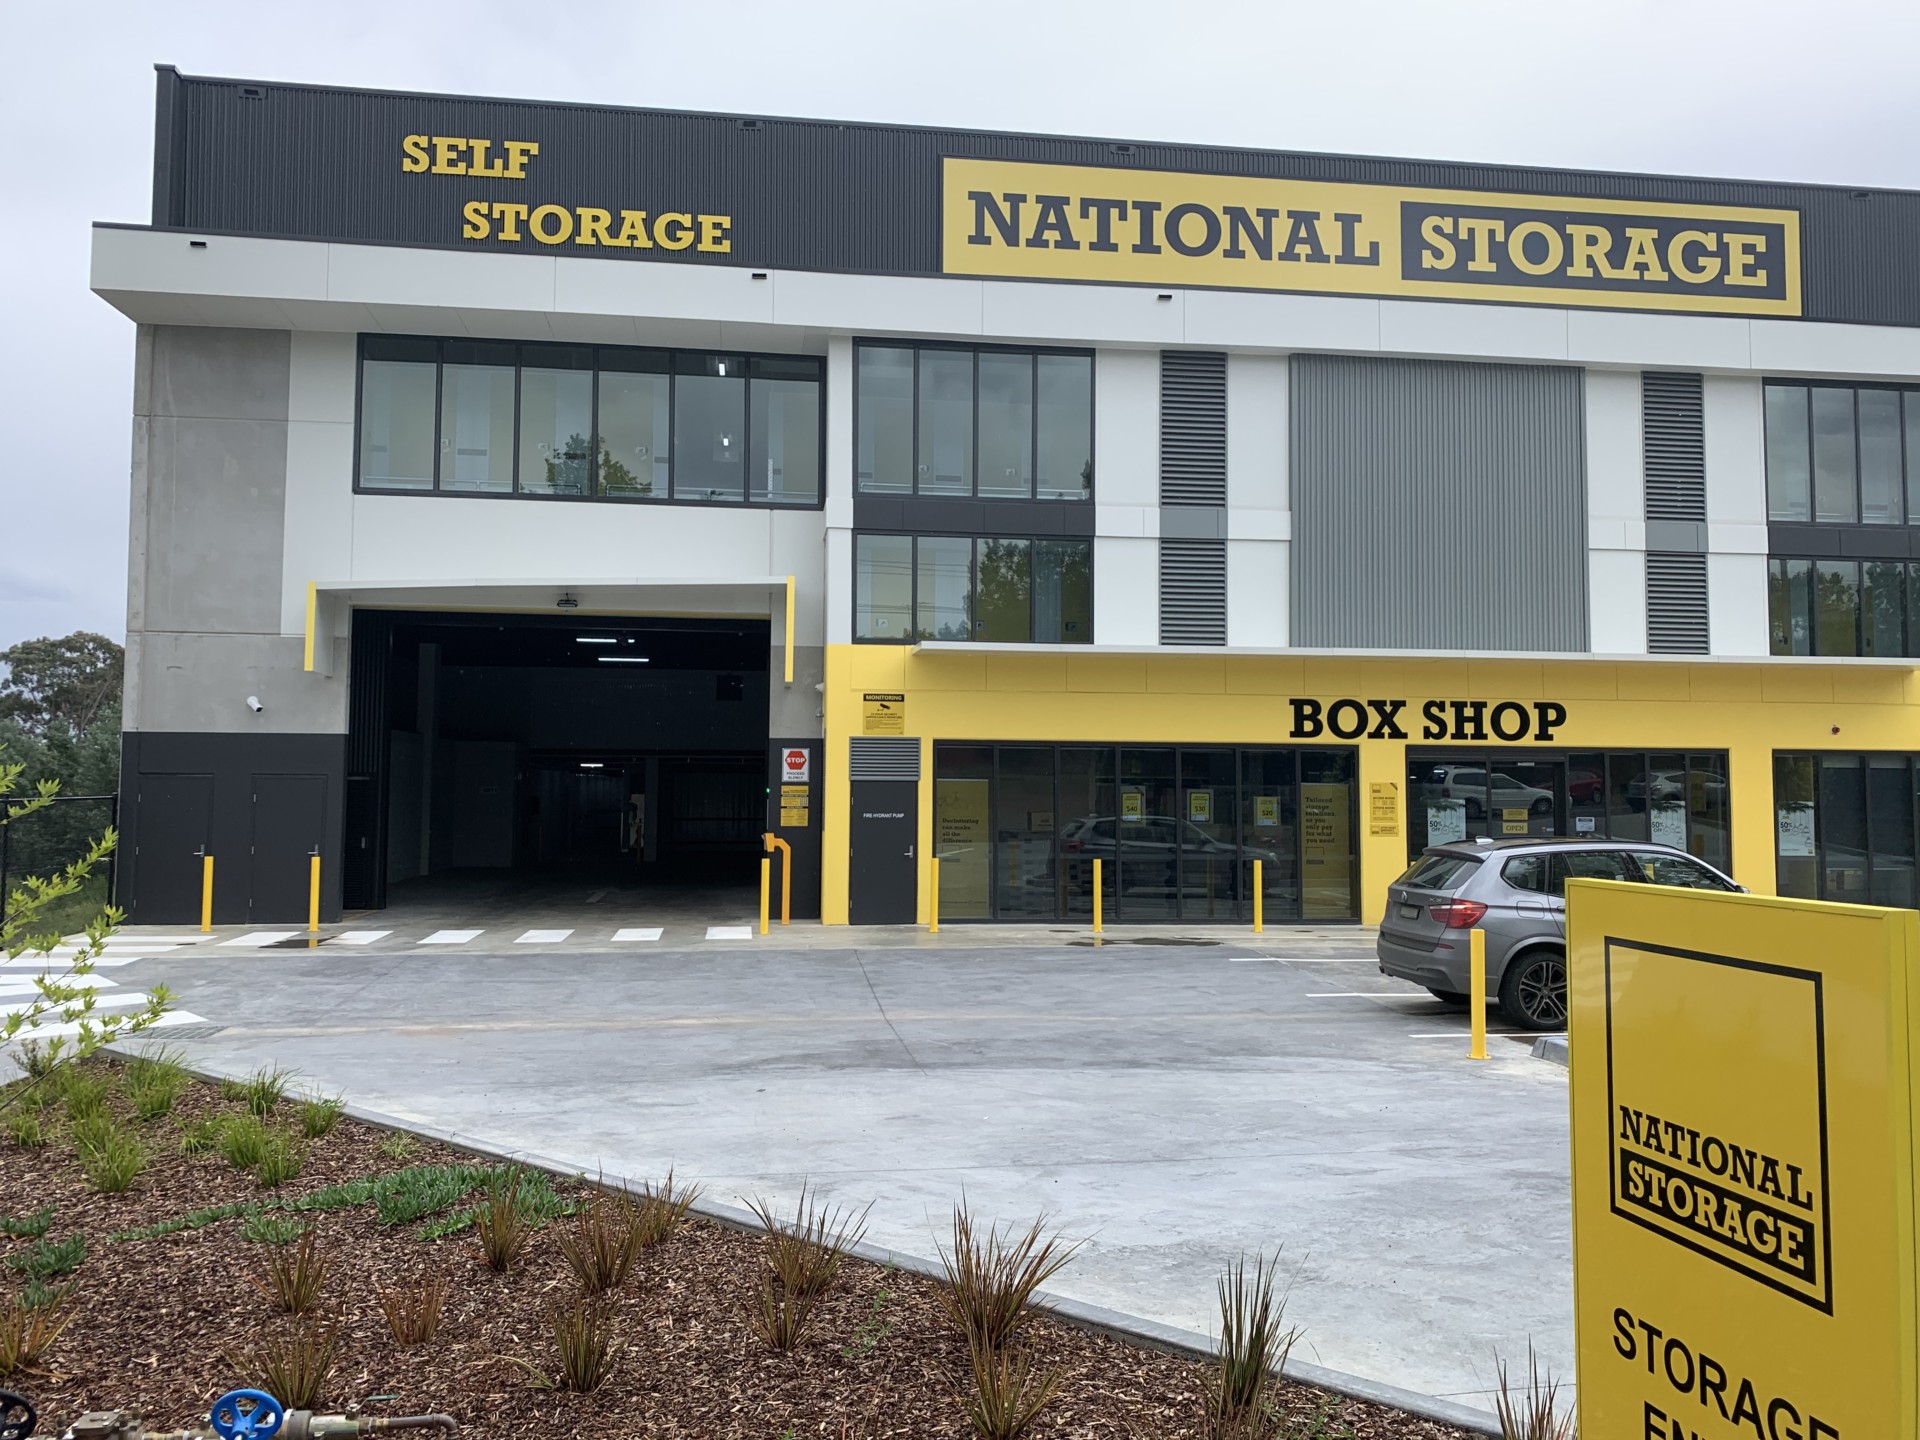 National Storage